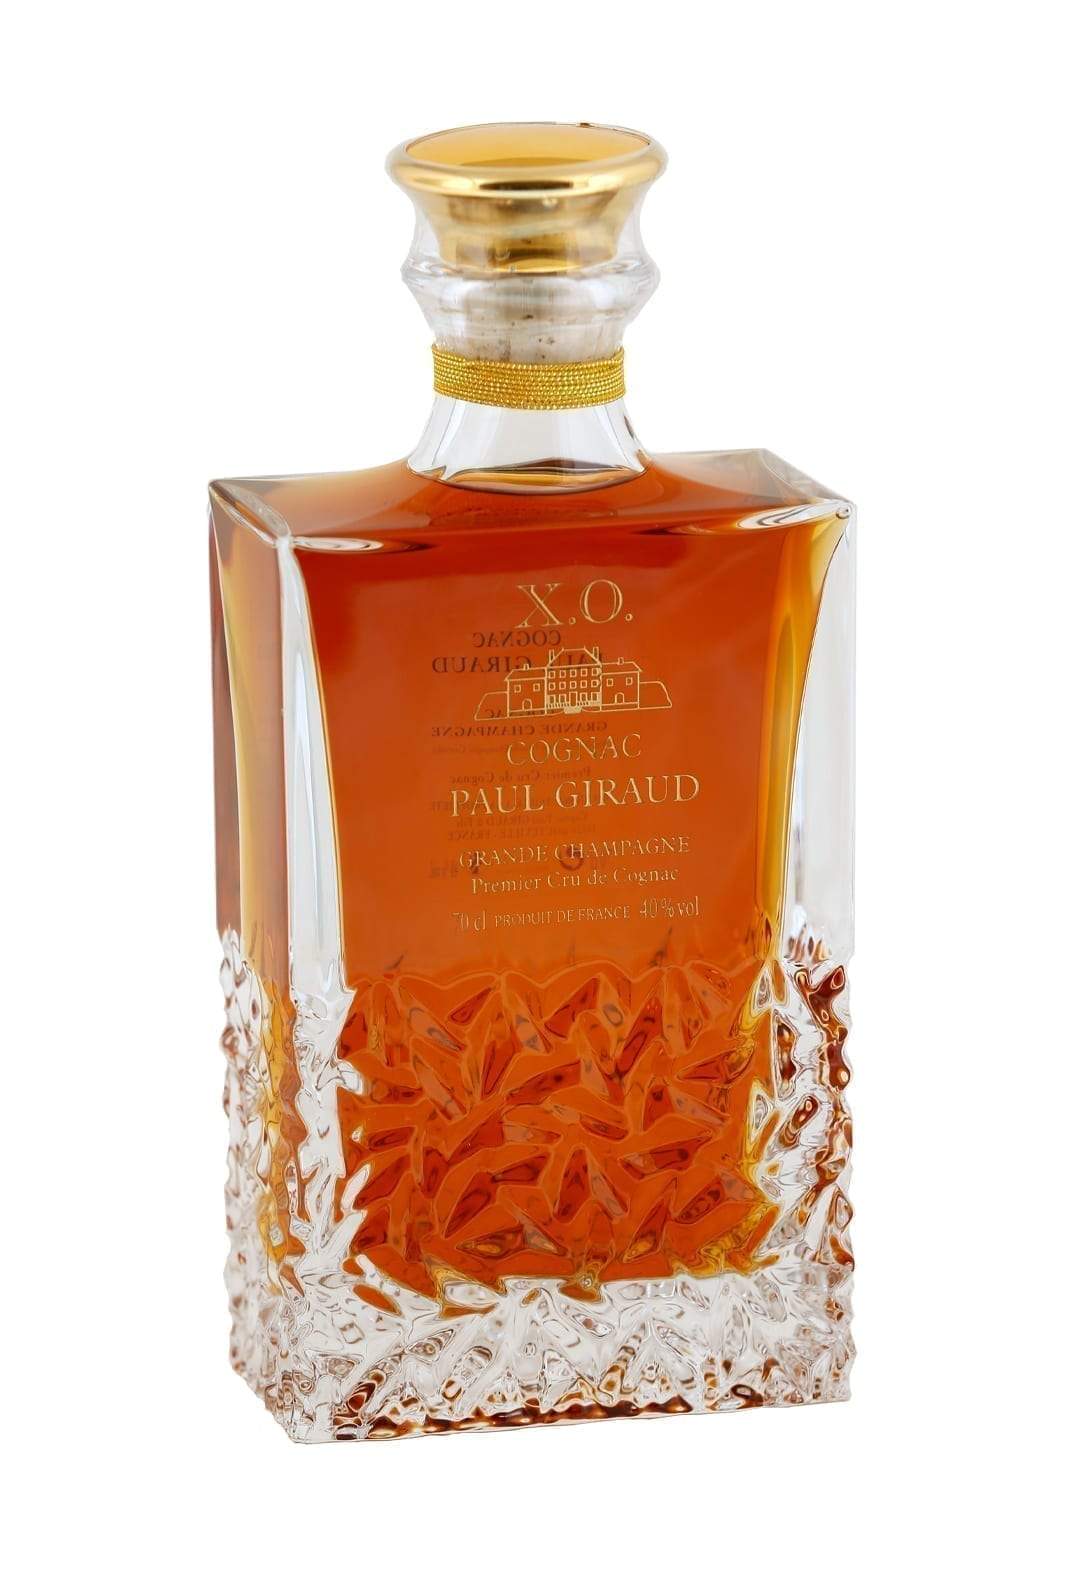 Paul Giraud XO Nicolette 25 years 40% 700ml | Brandy | Shop online at Spirits of France